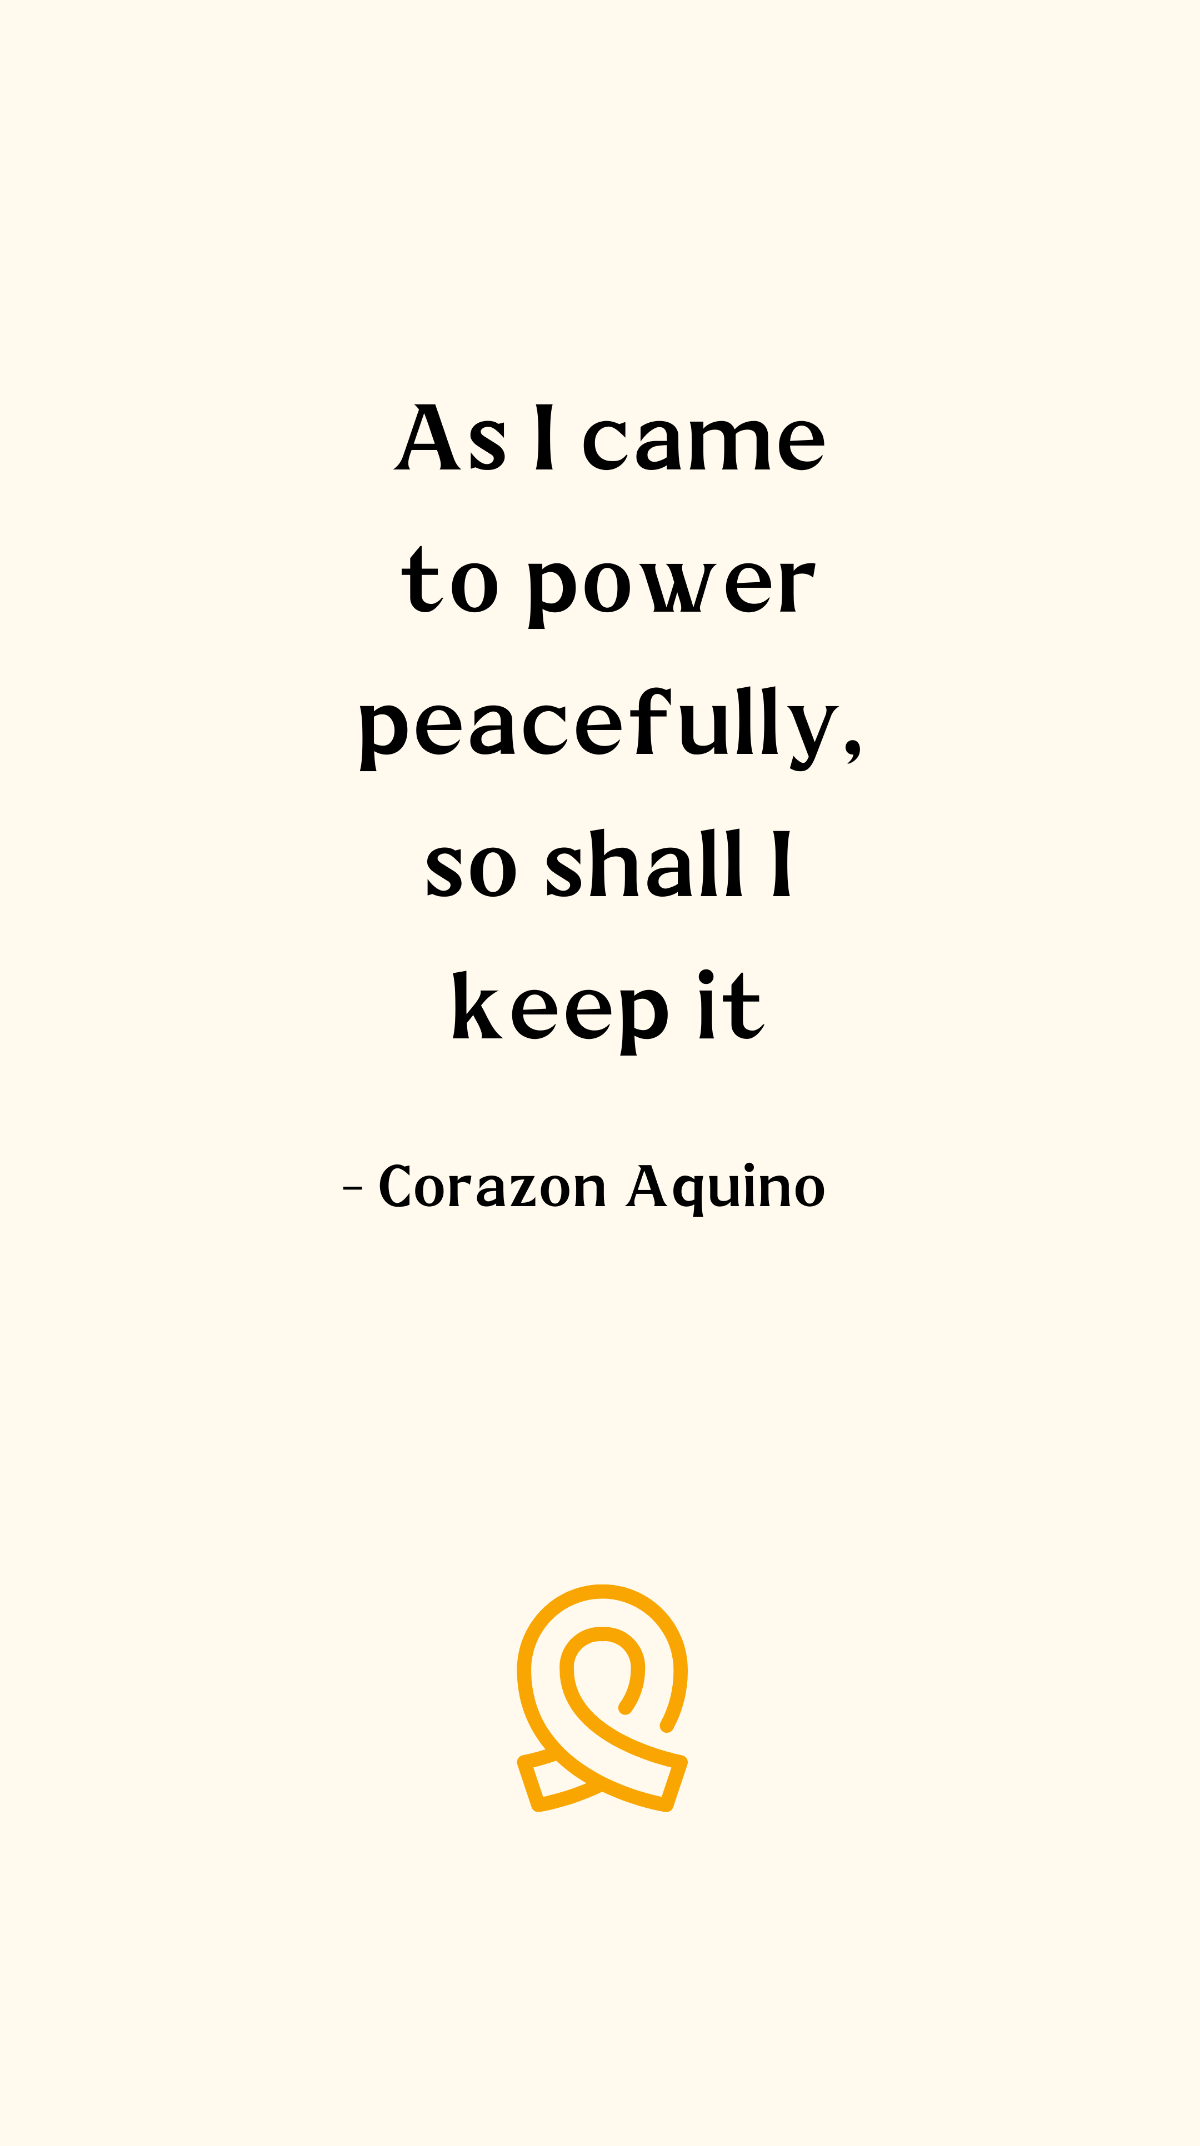 Corazon Aquino - As I came to power peacefully, so shall I keep it